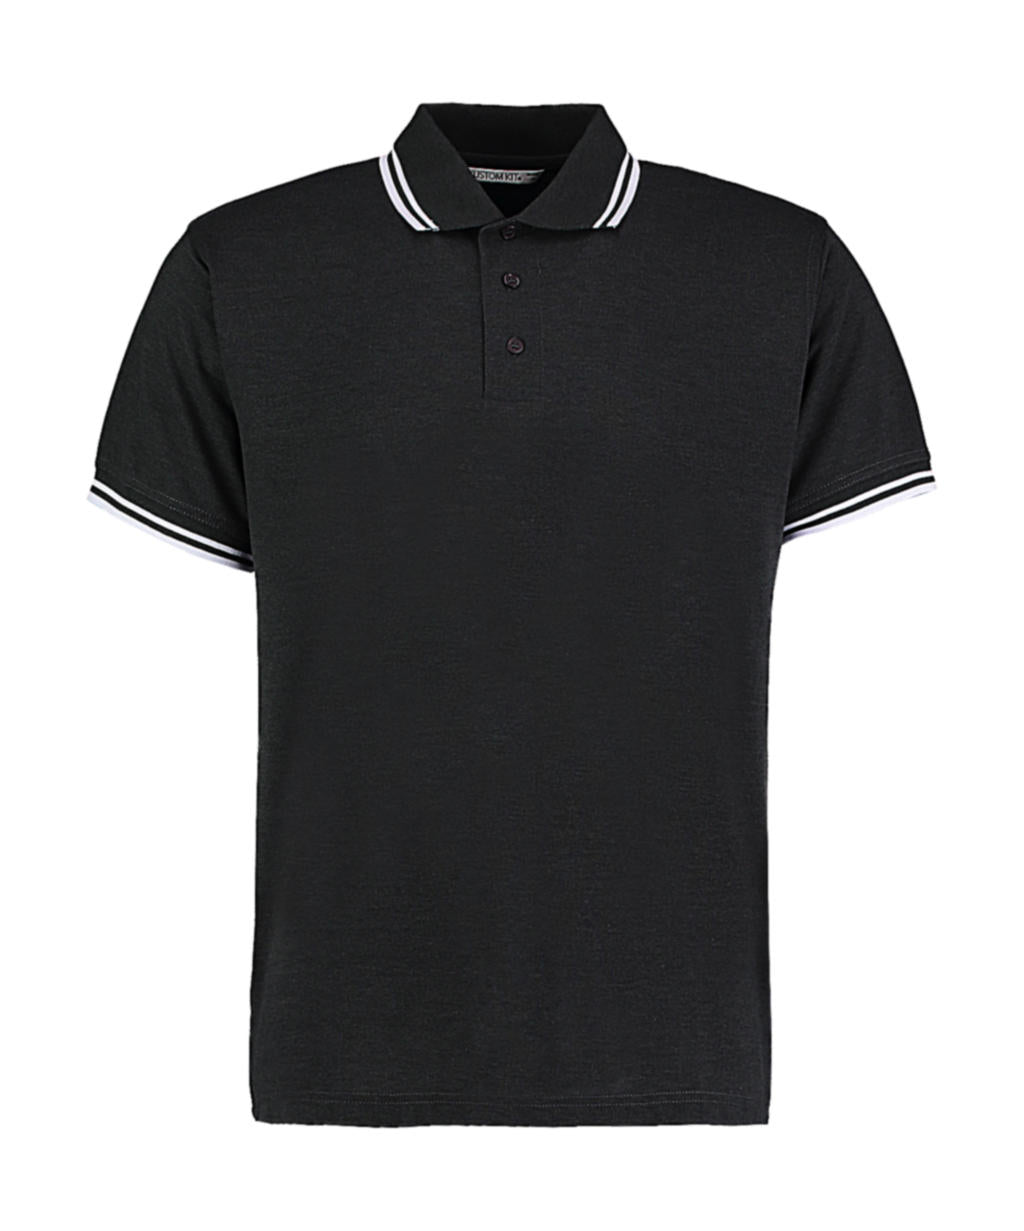 Kustom Kit Herren Poloshirt Polo Shirt Polohemd Shirt T-Shirt Kurzarm